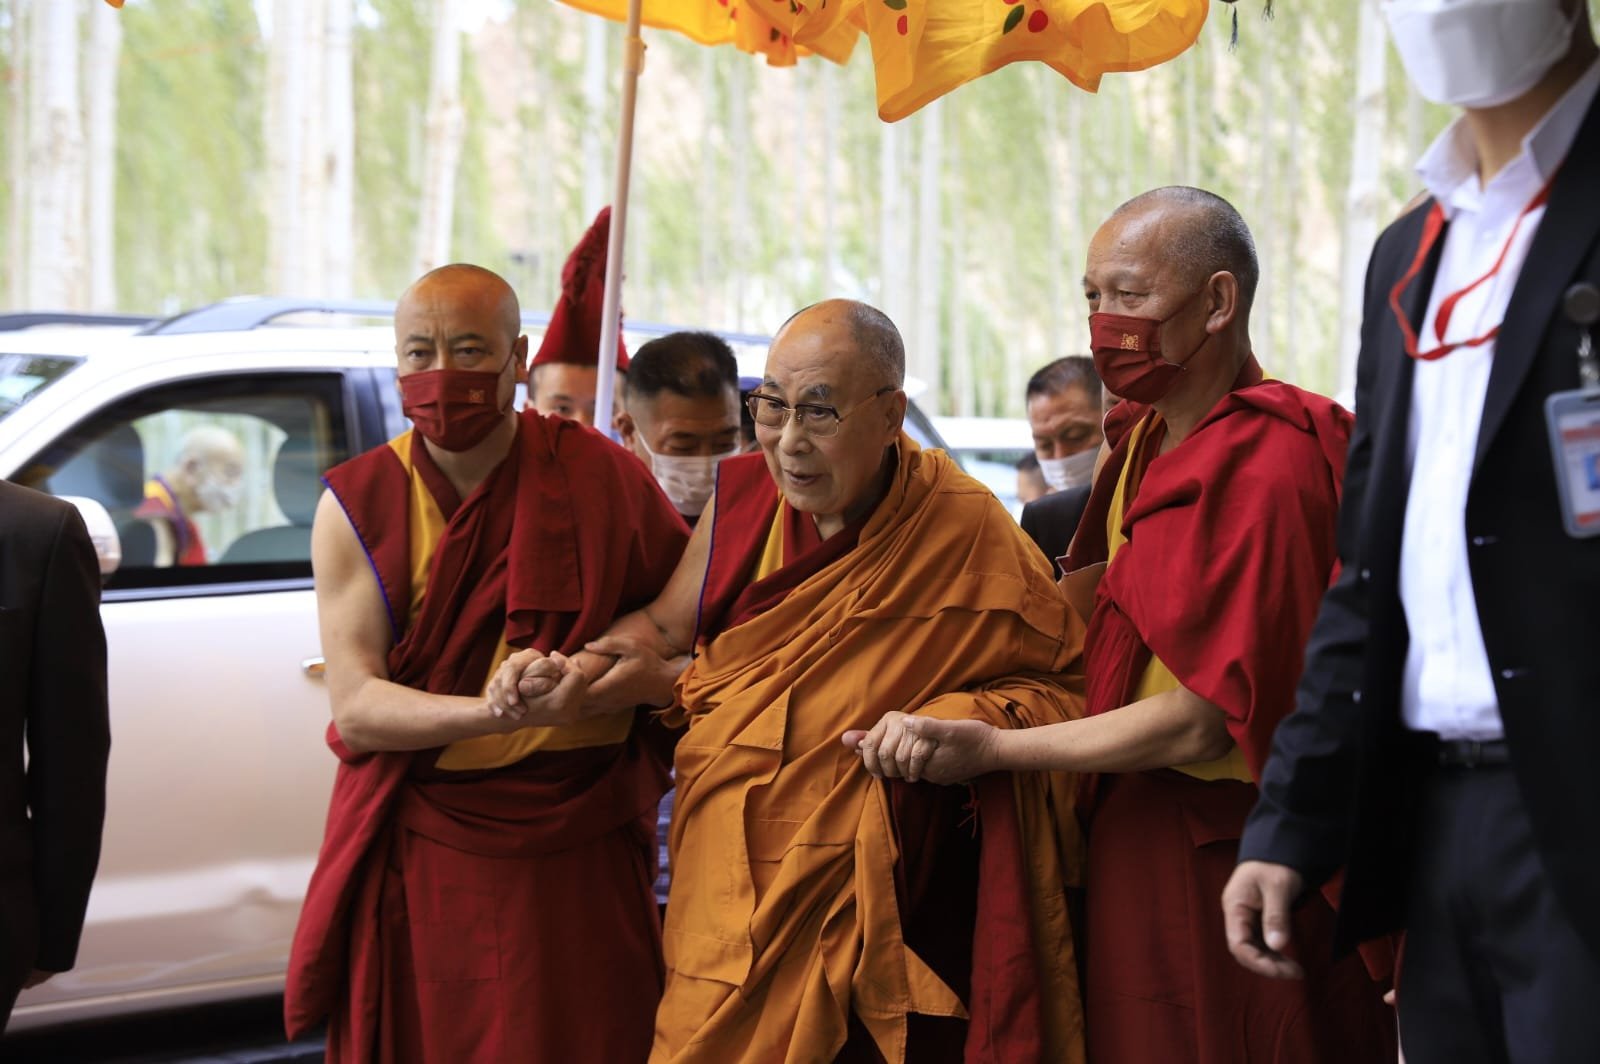 Ladakh visit religious: Govt functionary on Dalai Lama’s visit to UT